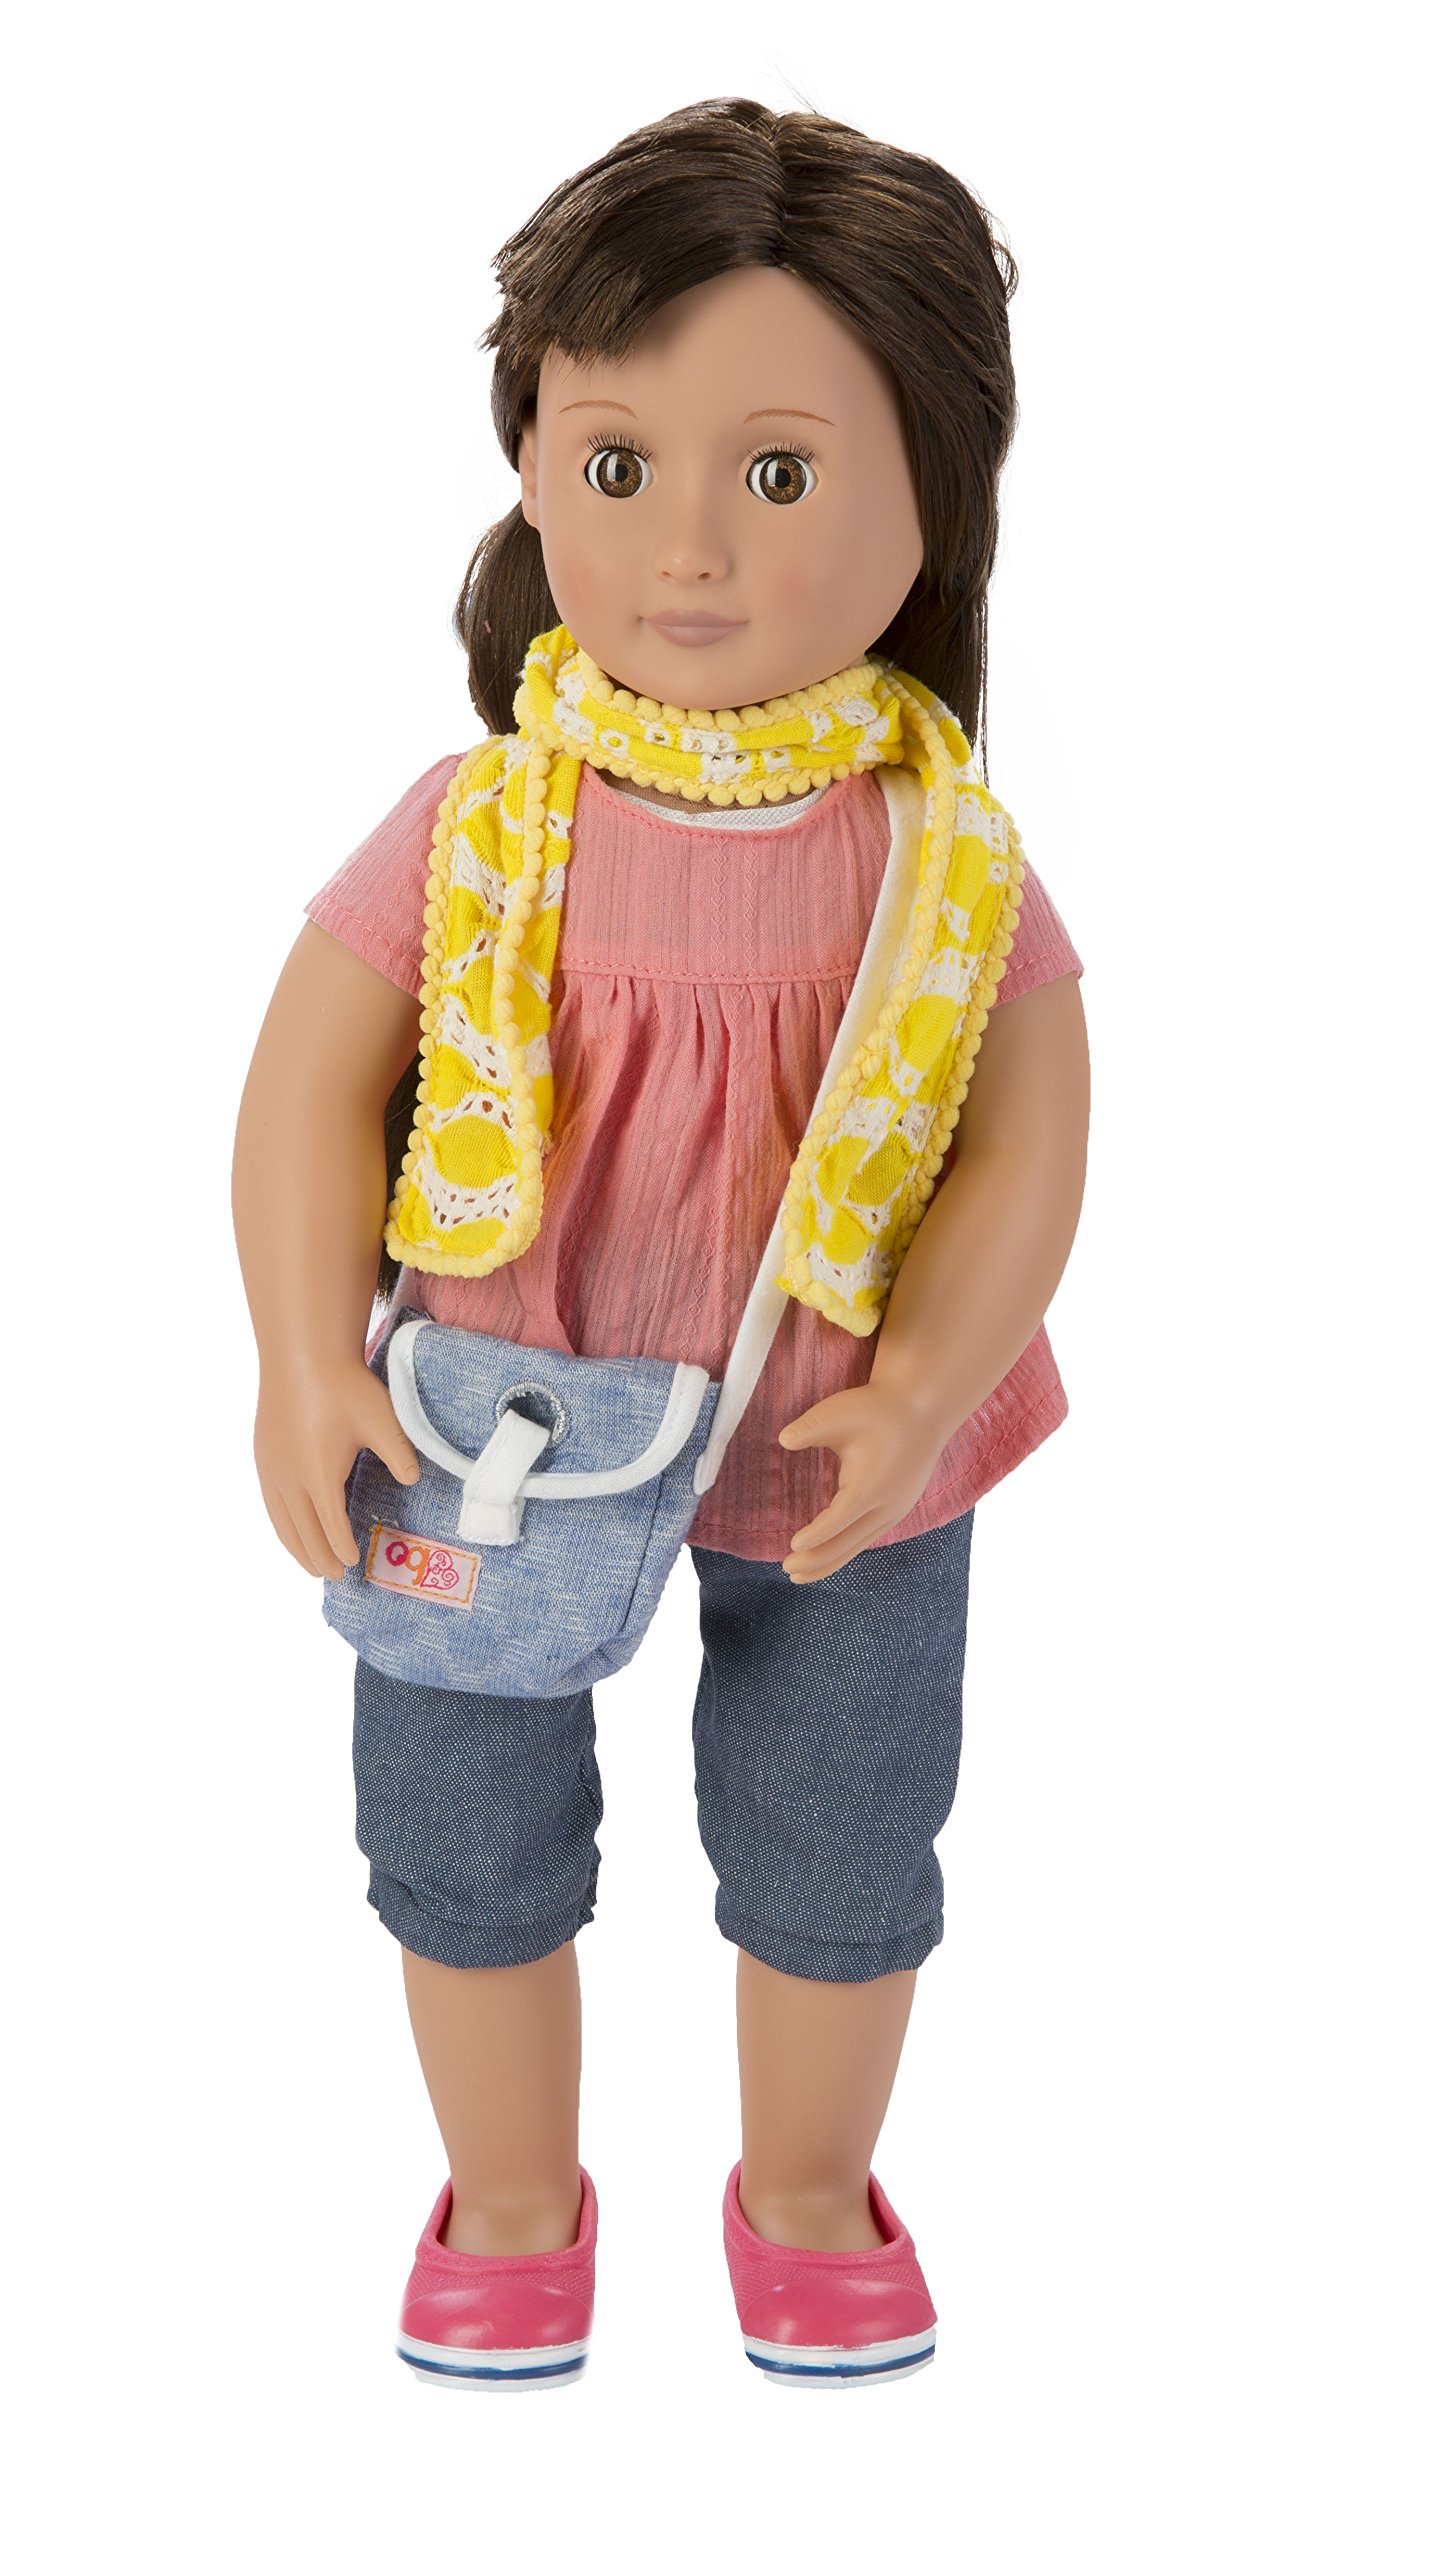 Our Generation 44279 - Reese OG Puppe mit Blumenkleid B, 46 cm